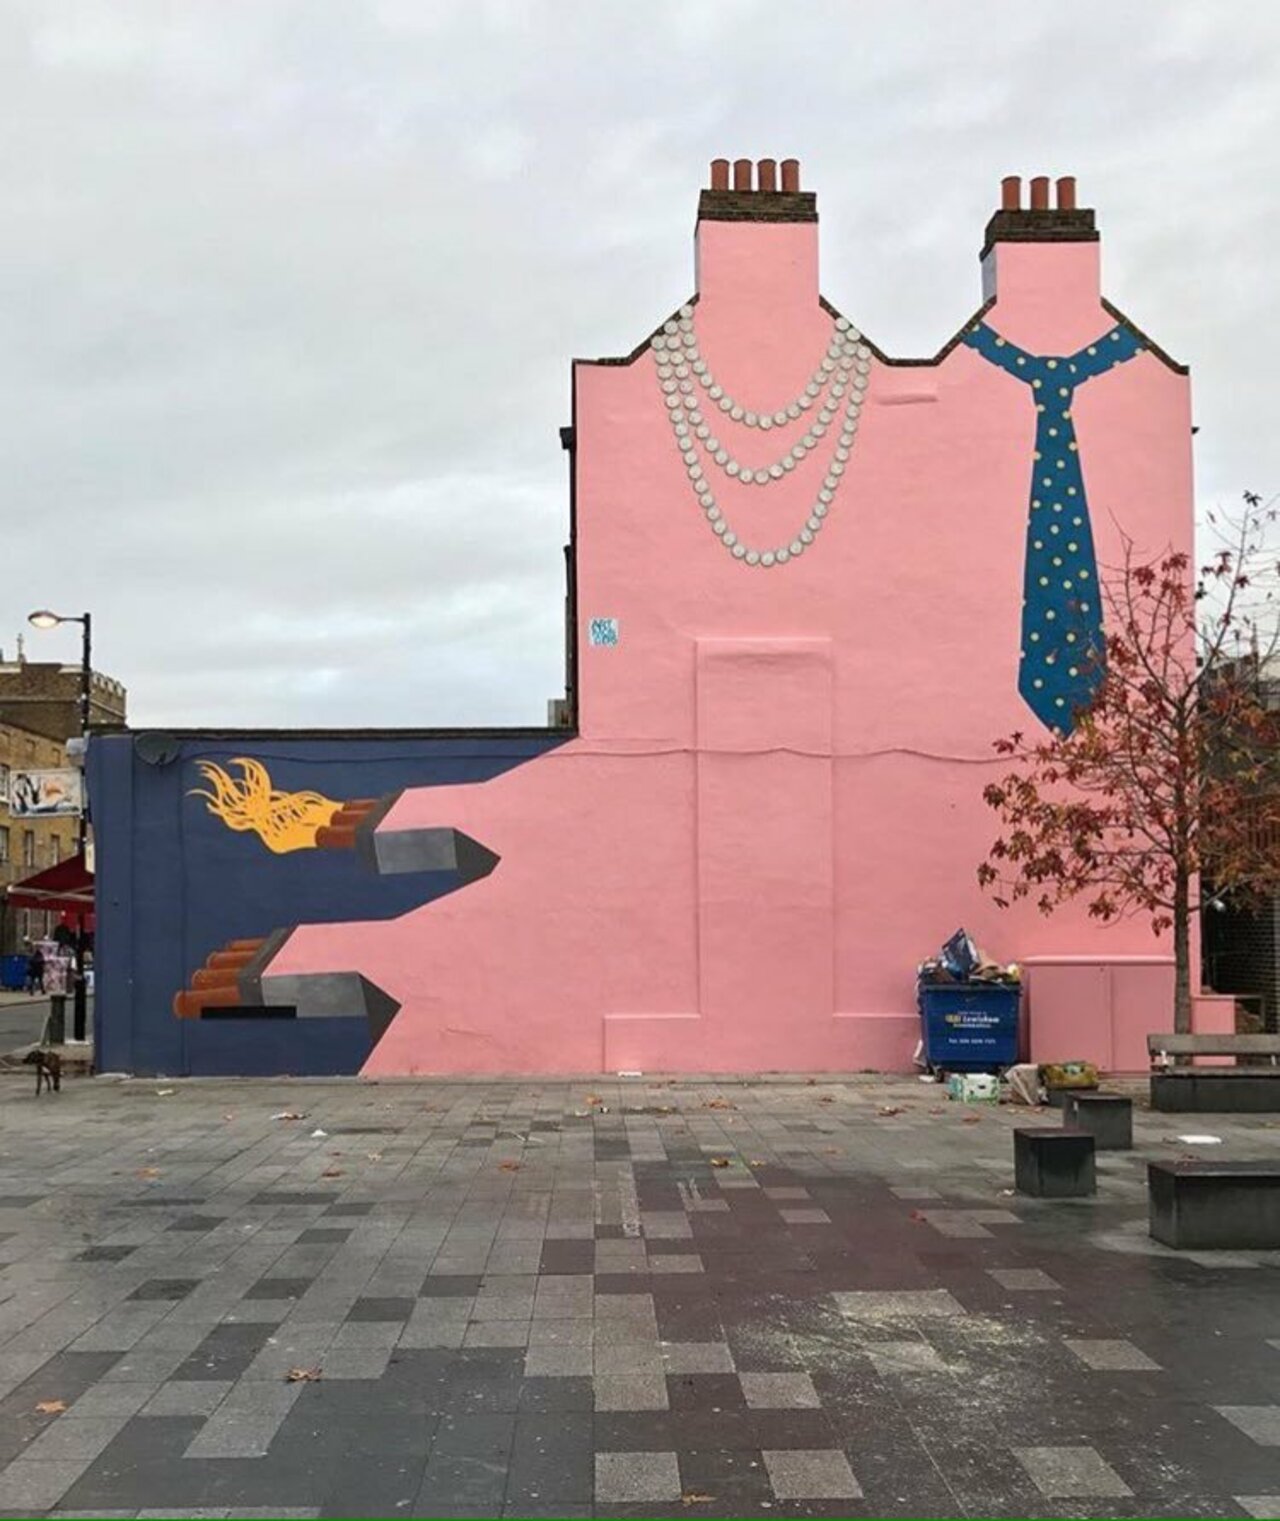 Street Art in London by ArtMongers #art #mural #graffiti #streetart via @QueGraffiti #designthinking #photography #ArteUrbano https://t.co/HZ6tcemNHM